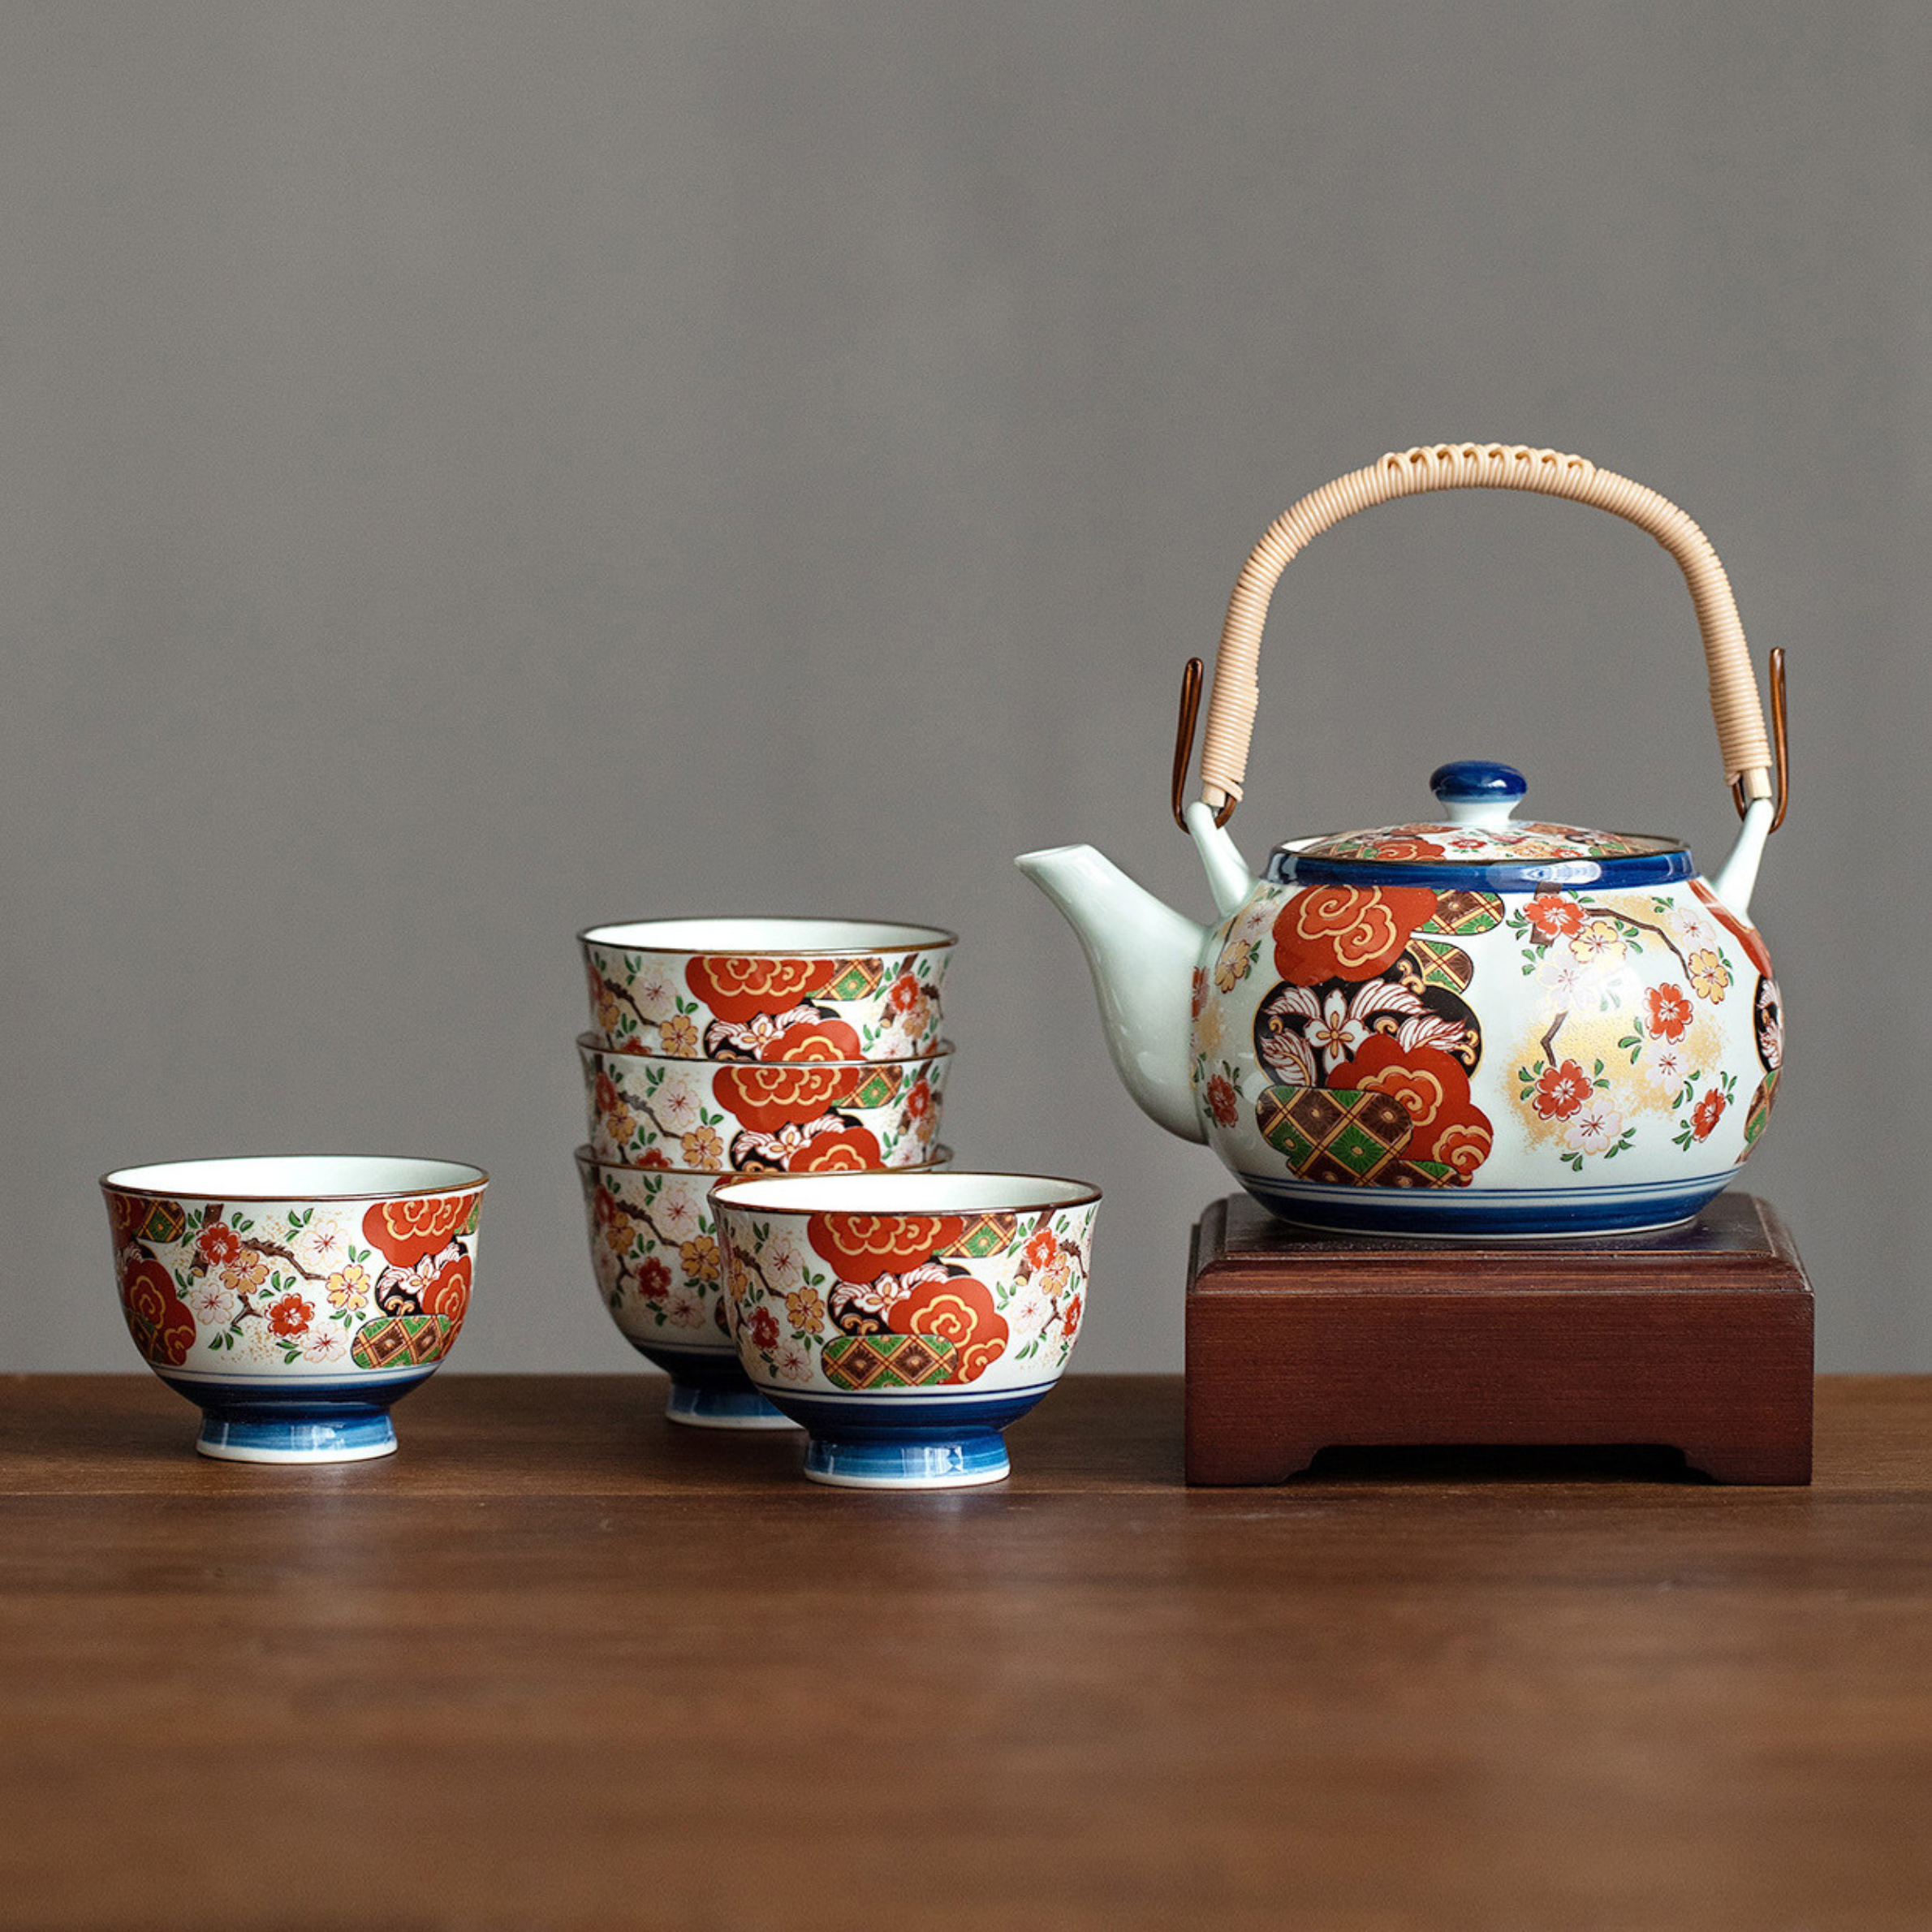 Handcrafted Ceramic Japanese Teacup Teapot Set